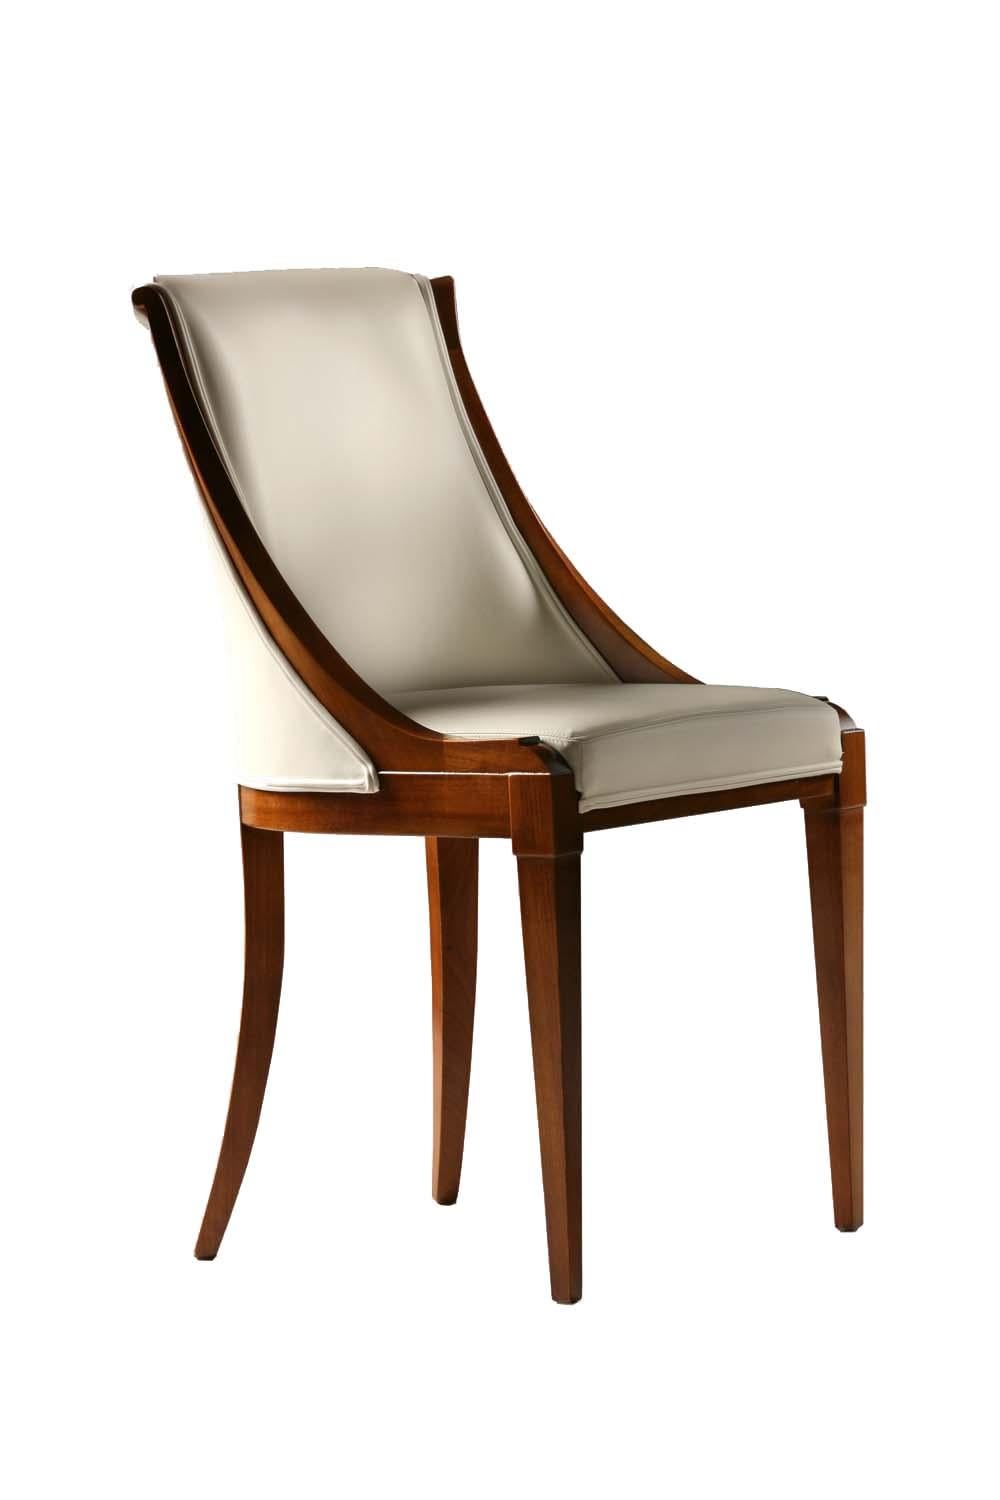 Italian Musa, Capitonè Upholstered Chair Made of Cherrywood